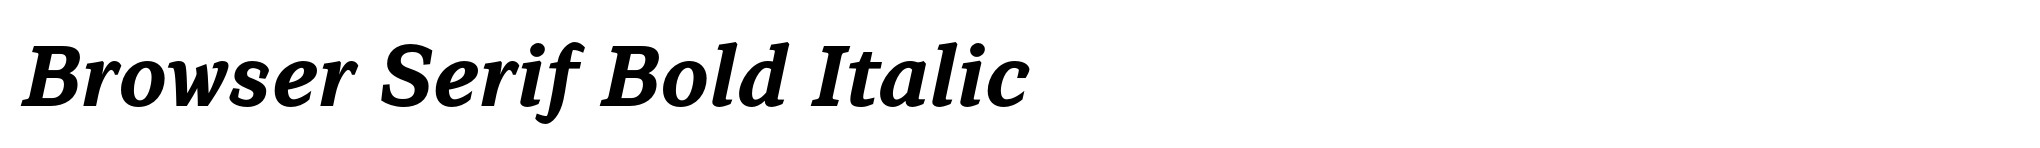 Browser Serif Bold Italic image